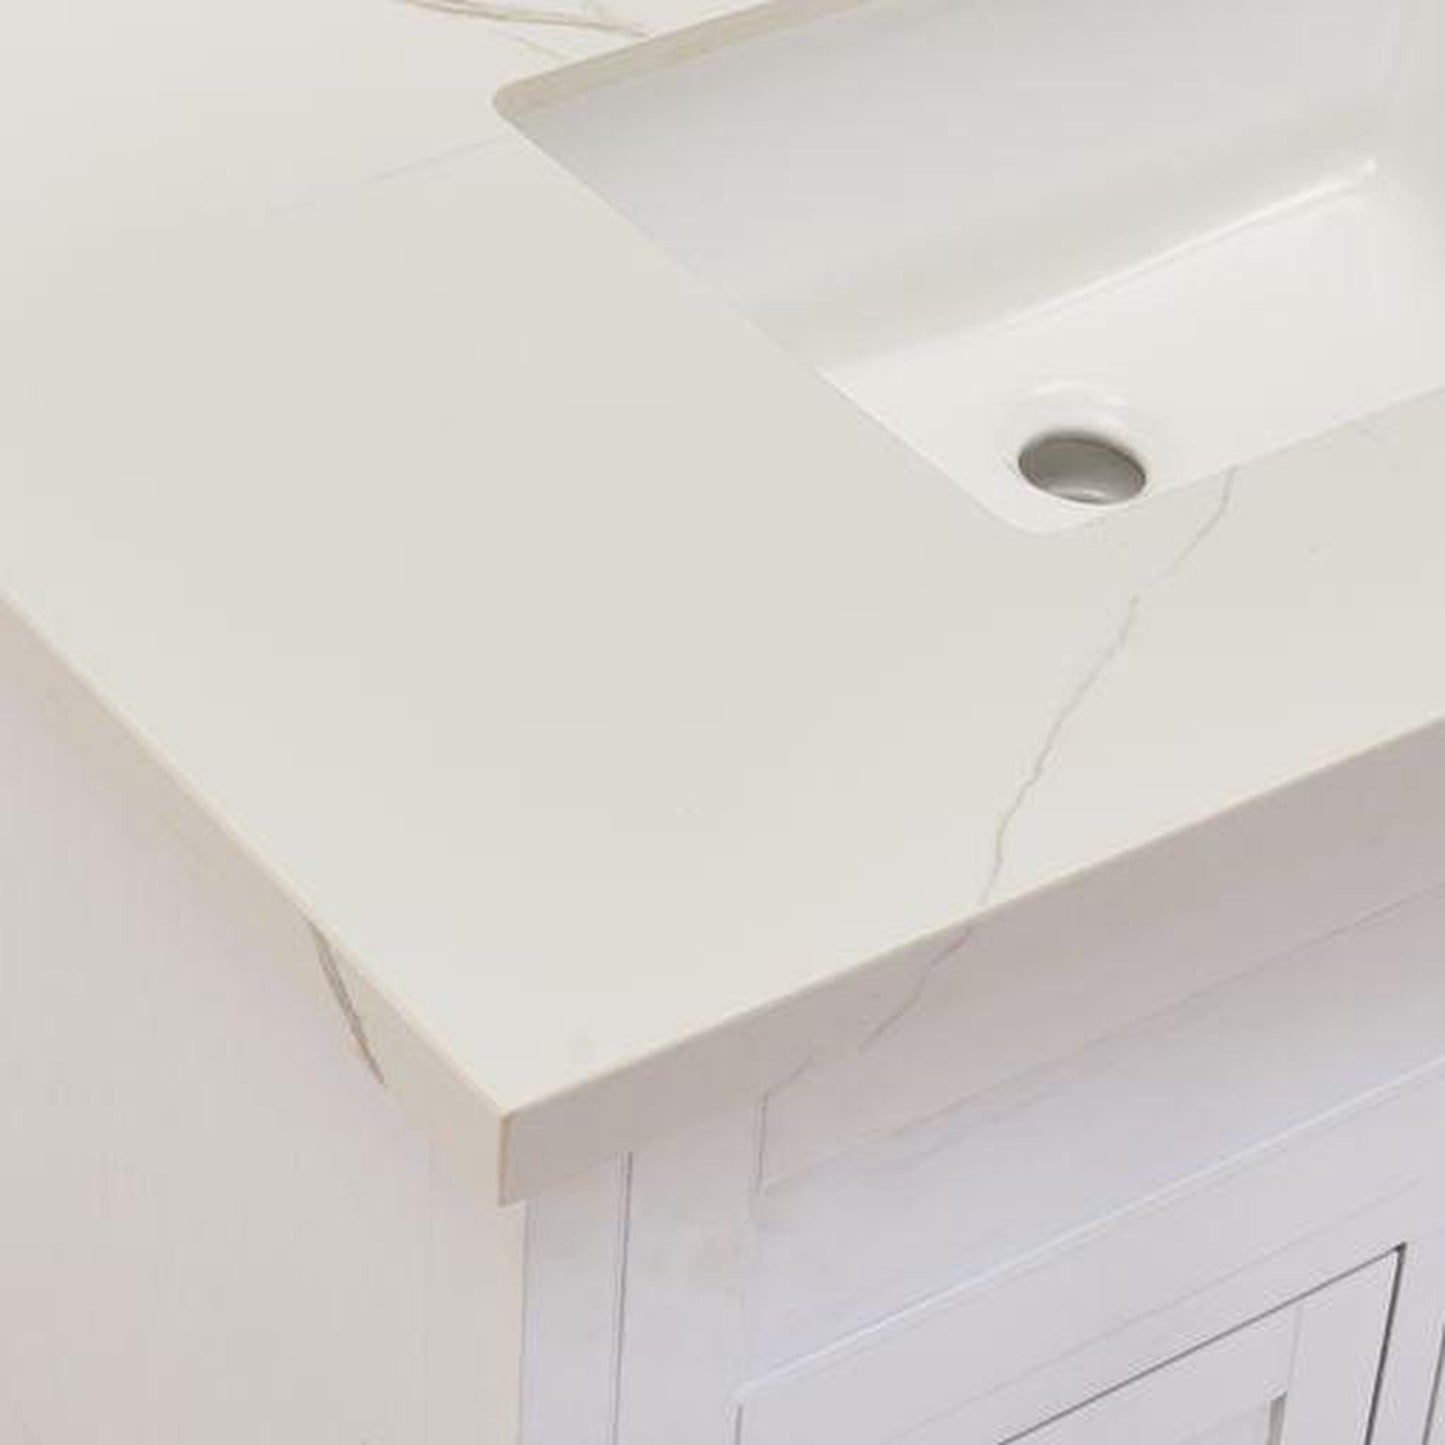 Altair Eivissa 37" x 22" Calacatta White Composite Stone Bathroom Vanity Top With White SInk